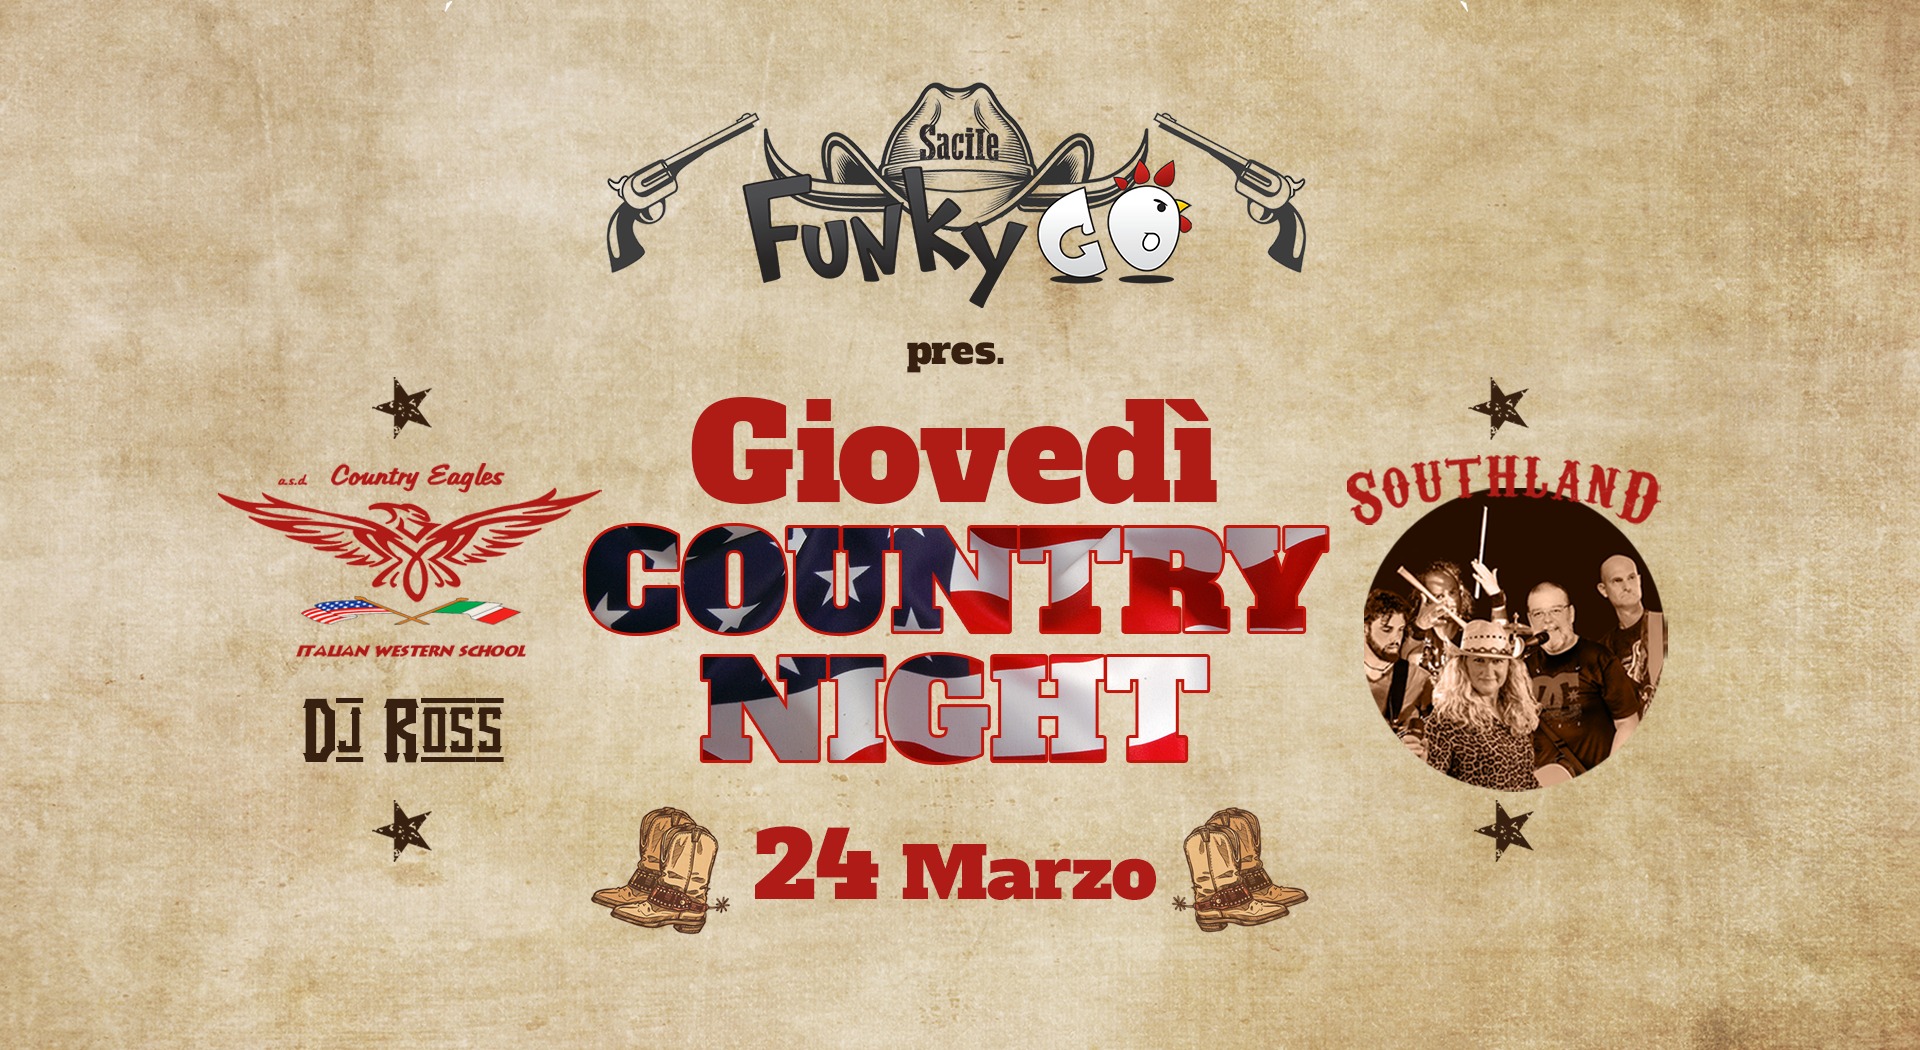 Southland & DJ Ross, Giovedì Country Night, Funky Go Sacile